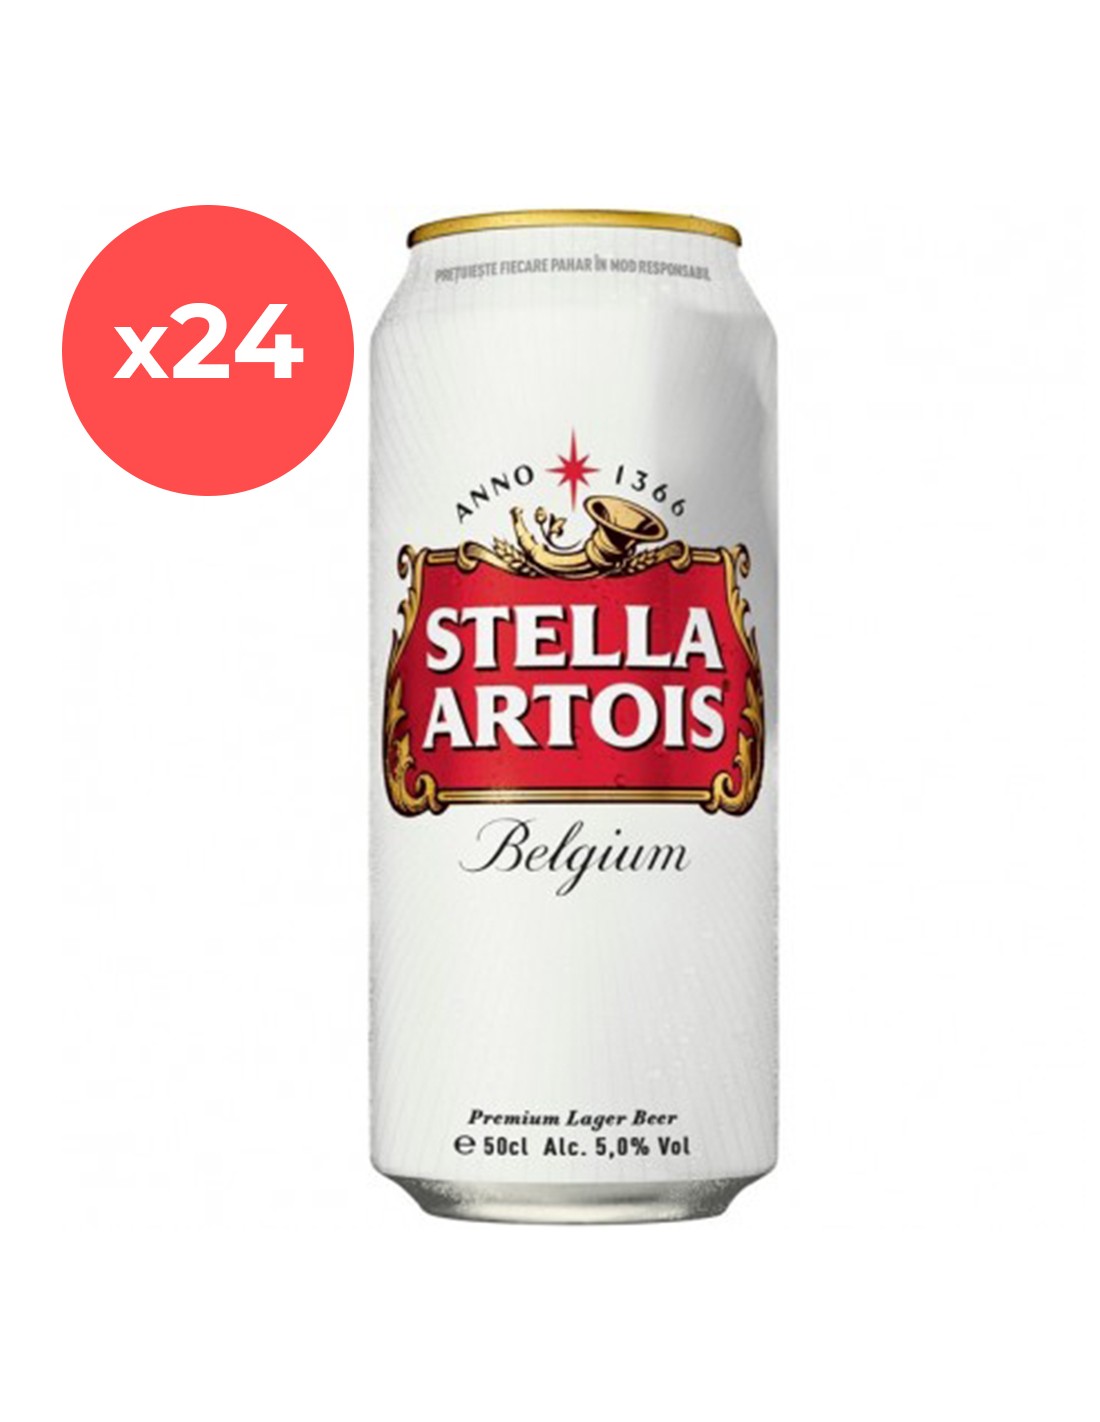 Bax 24 bucati bere blonda Stella Artois, 5% alc., 0.5L, doza, Belgia alcooldiscount.ro